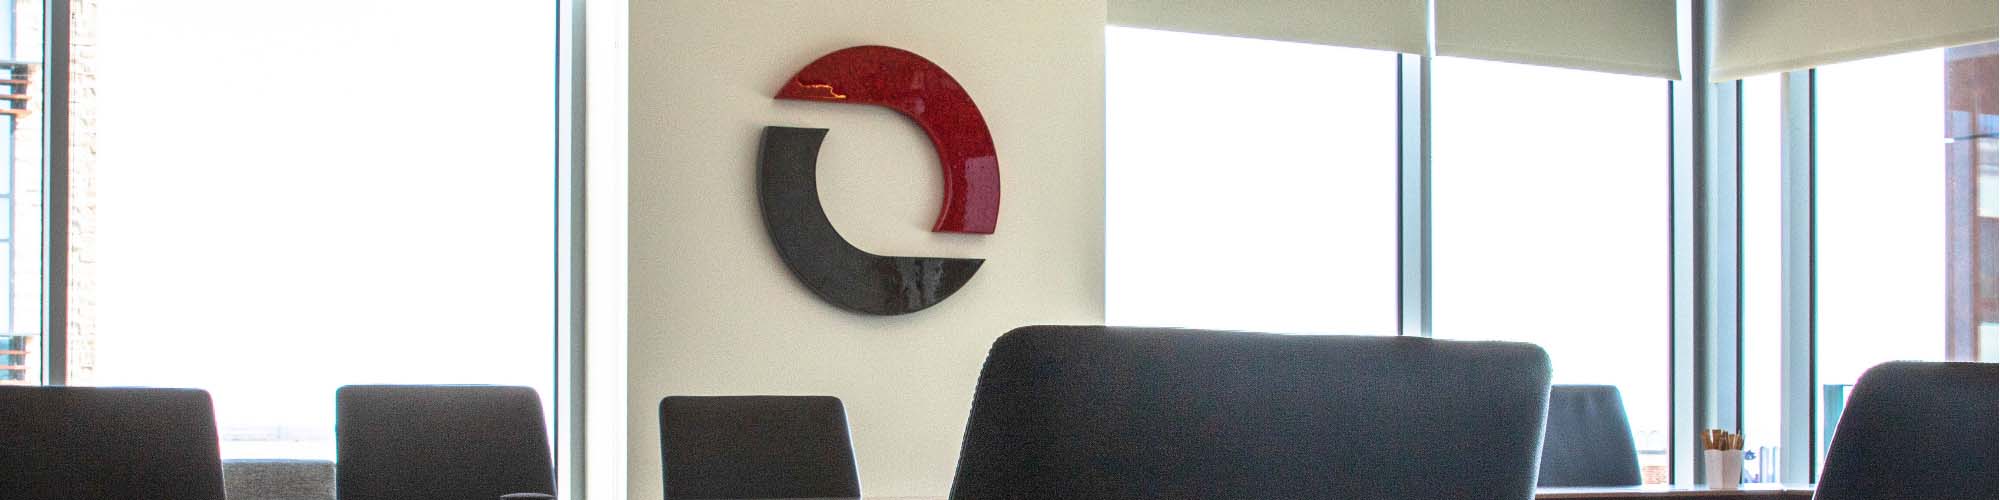 Omni Logistics headquarters board room with Omni logo sign on wall